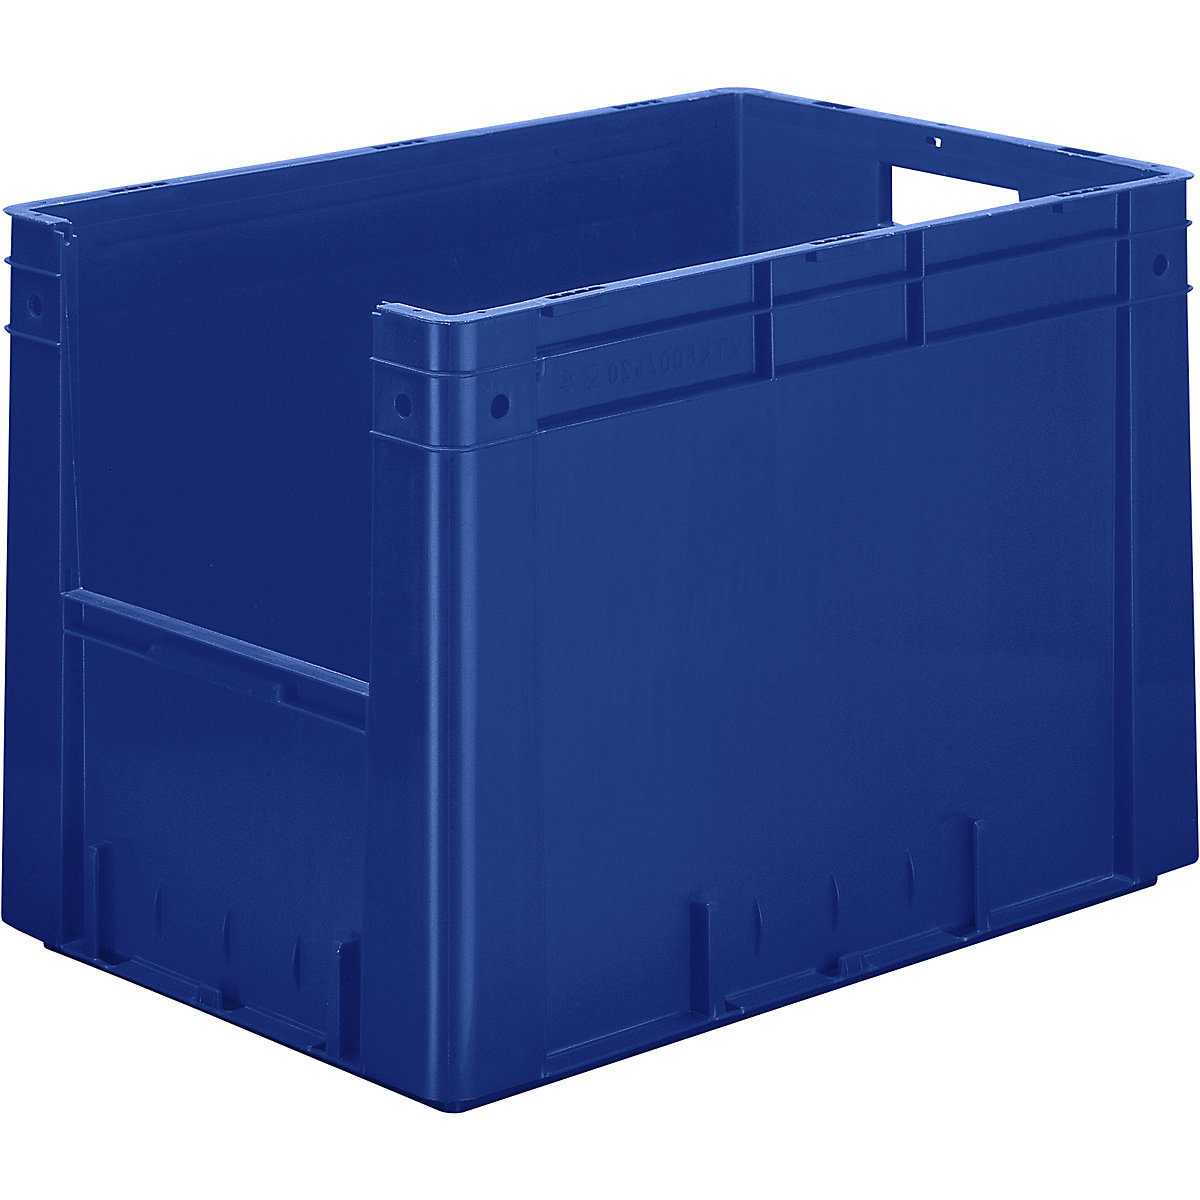 Spremnik za slaganje u EURO formatu, volumen 80 l, ŠxVxD 600 x 400 x 420 mm, pak. 2 kom., u plavoj boji-4